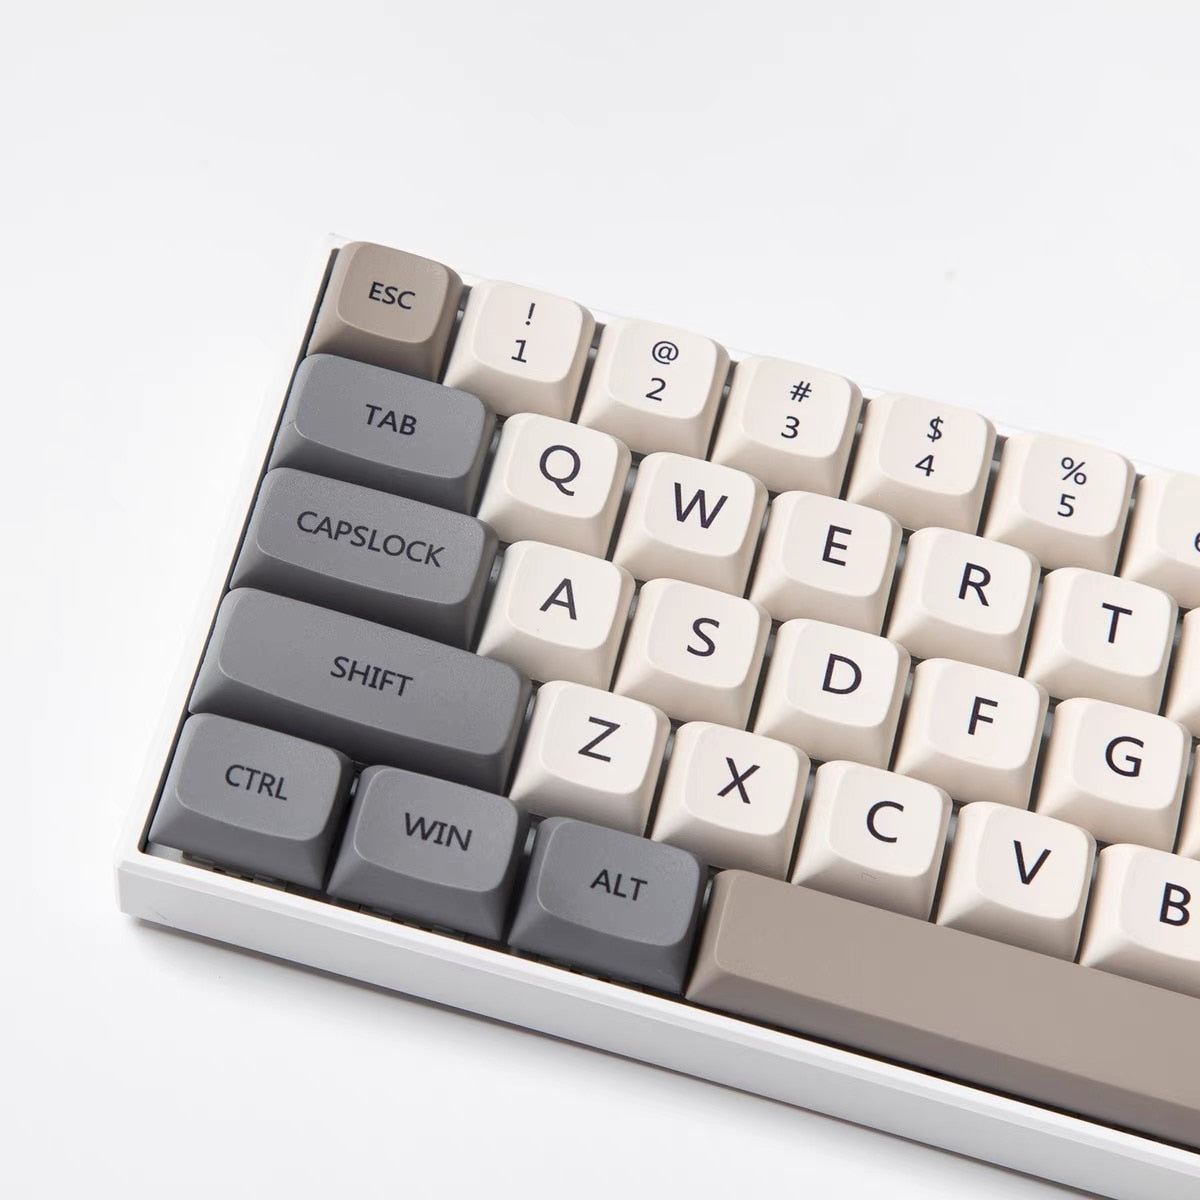 120 Key PBT Keycap SET DYE-Sublimated Legends XDA Profile For Mechanical Keyboard